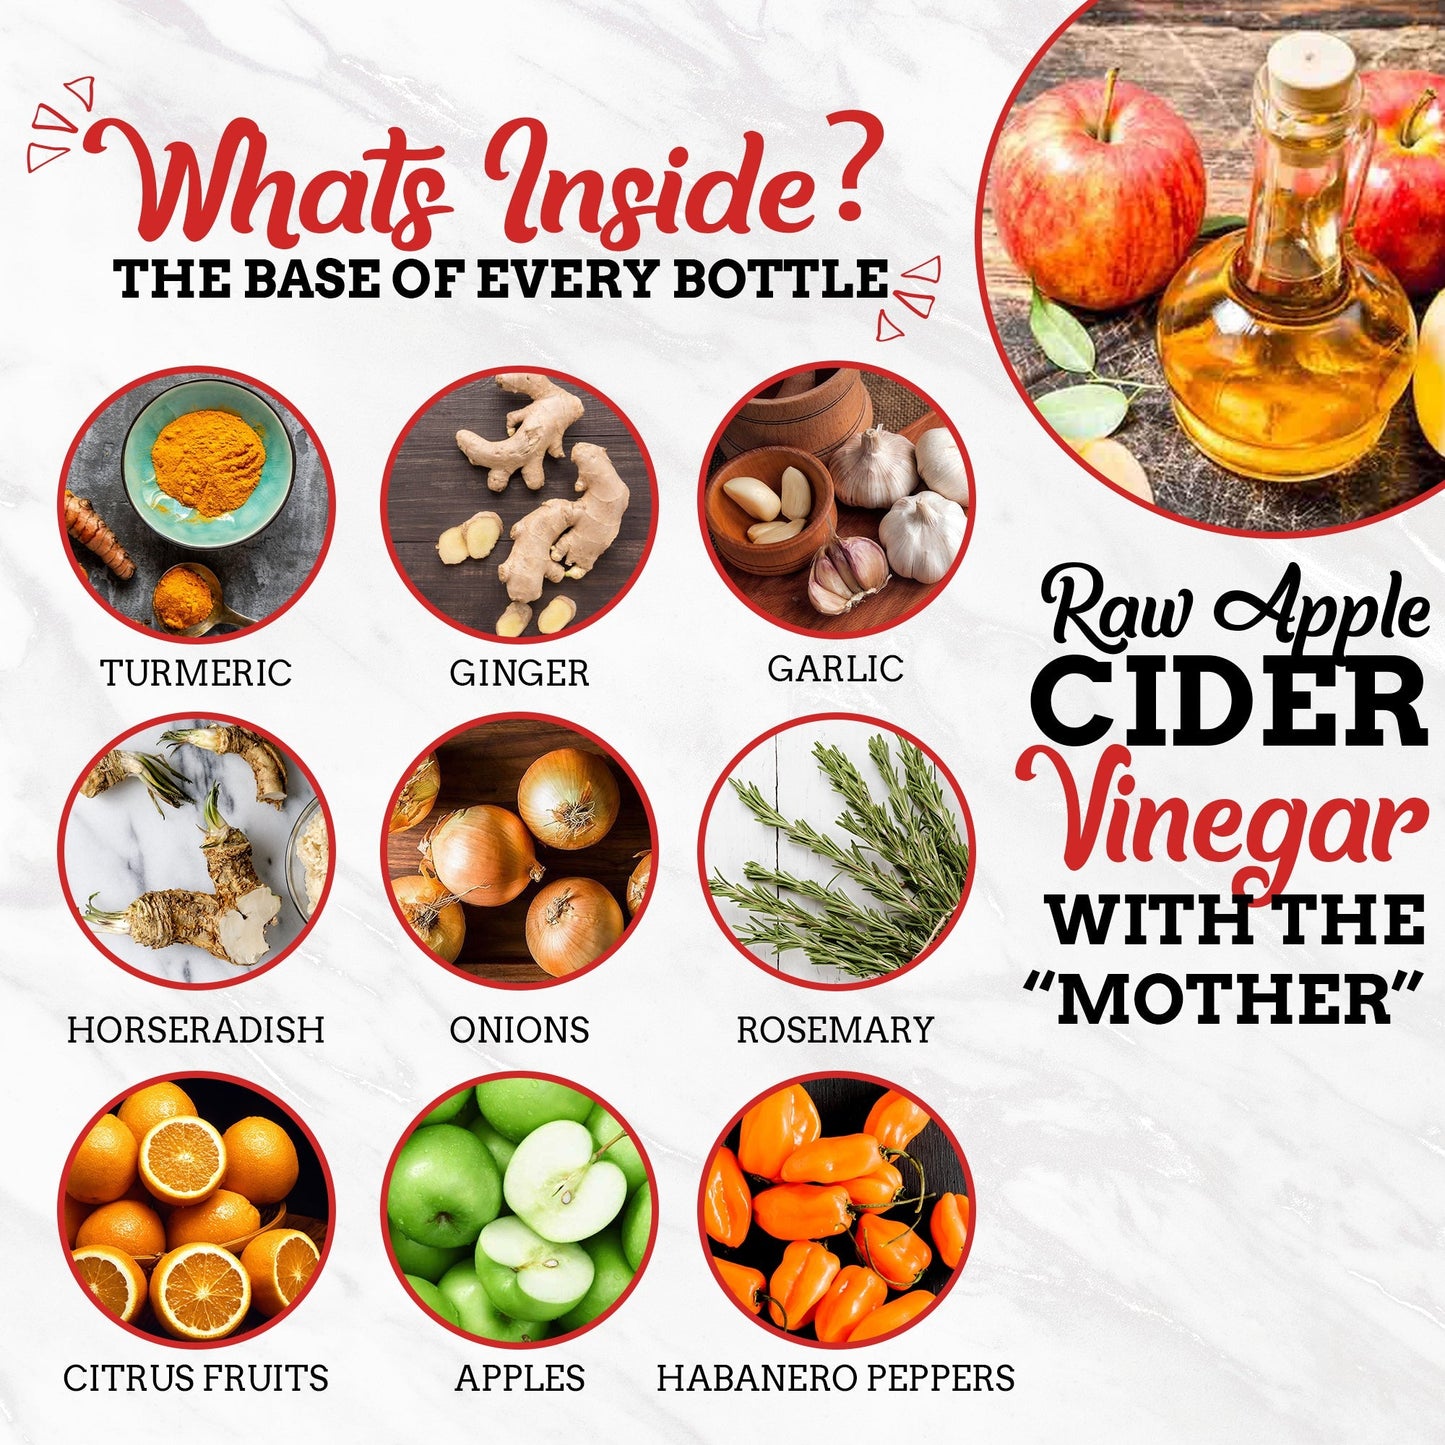 Beet ENERGY Apple Cider Vinegar Tonic